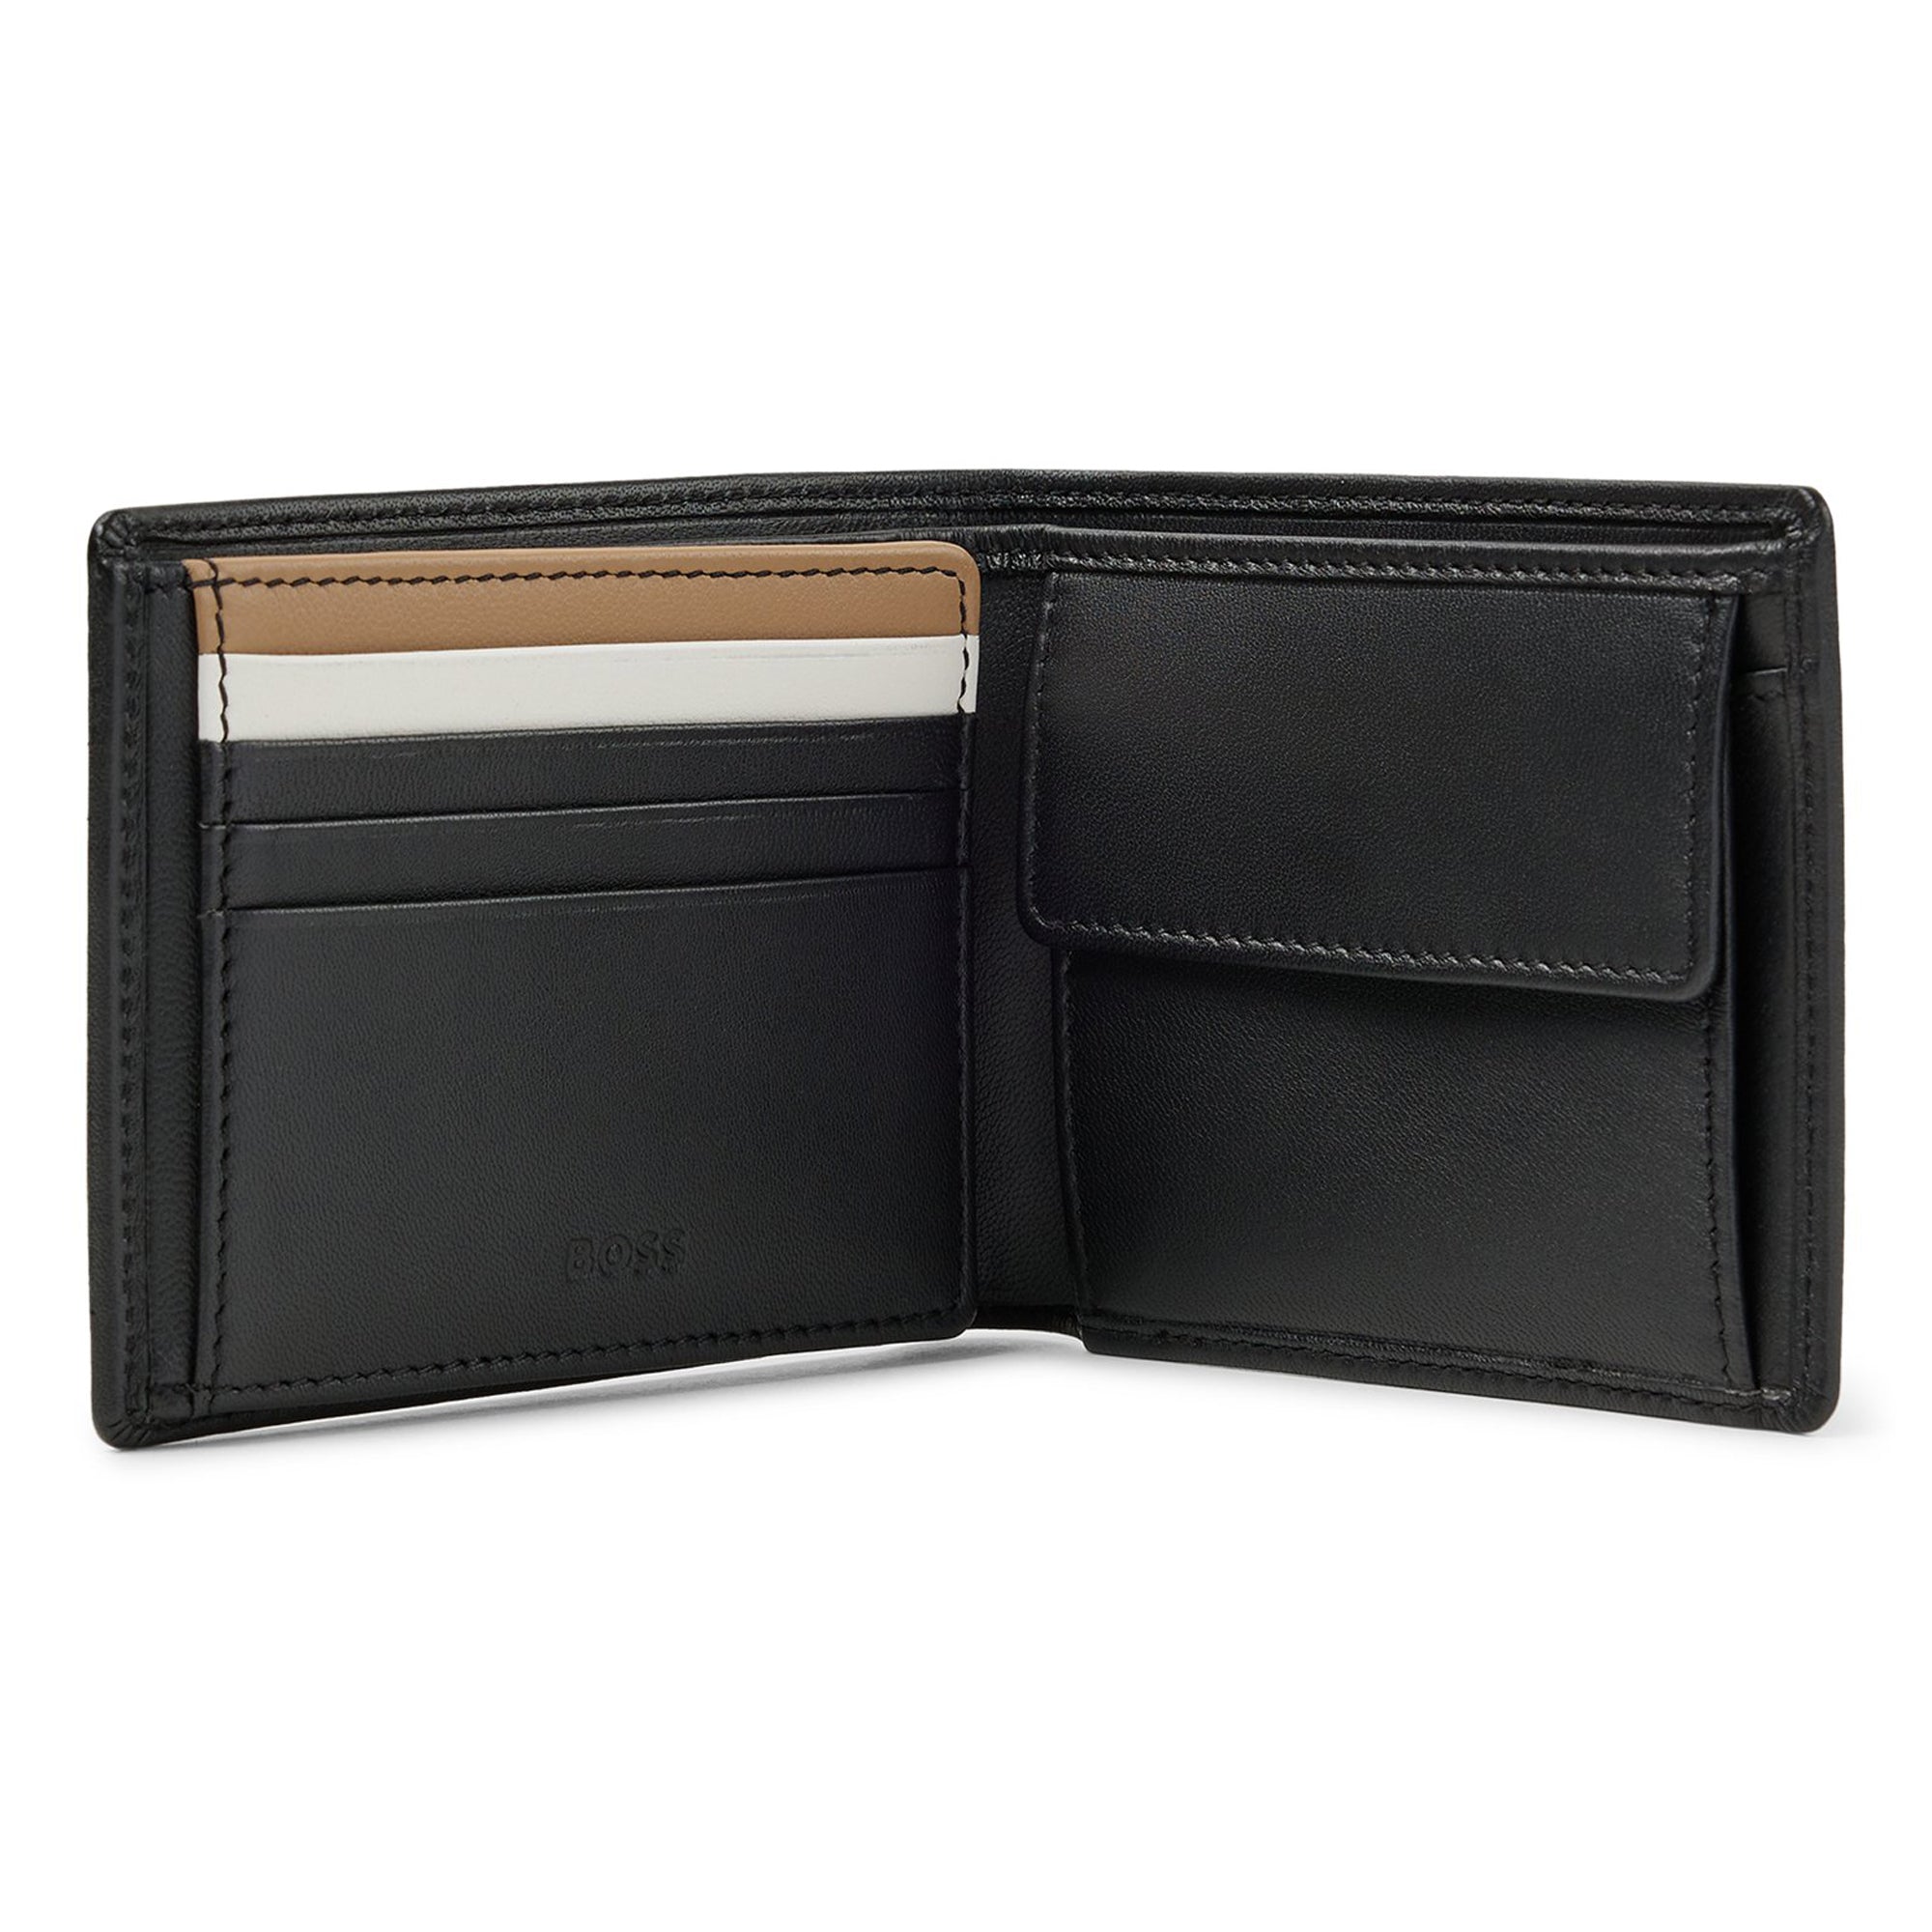 Boss Byron S Embossed RFID Tri Fold Wallet - Black